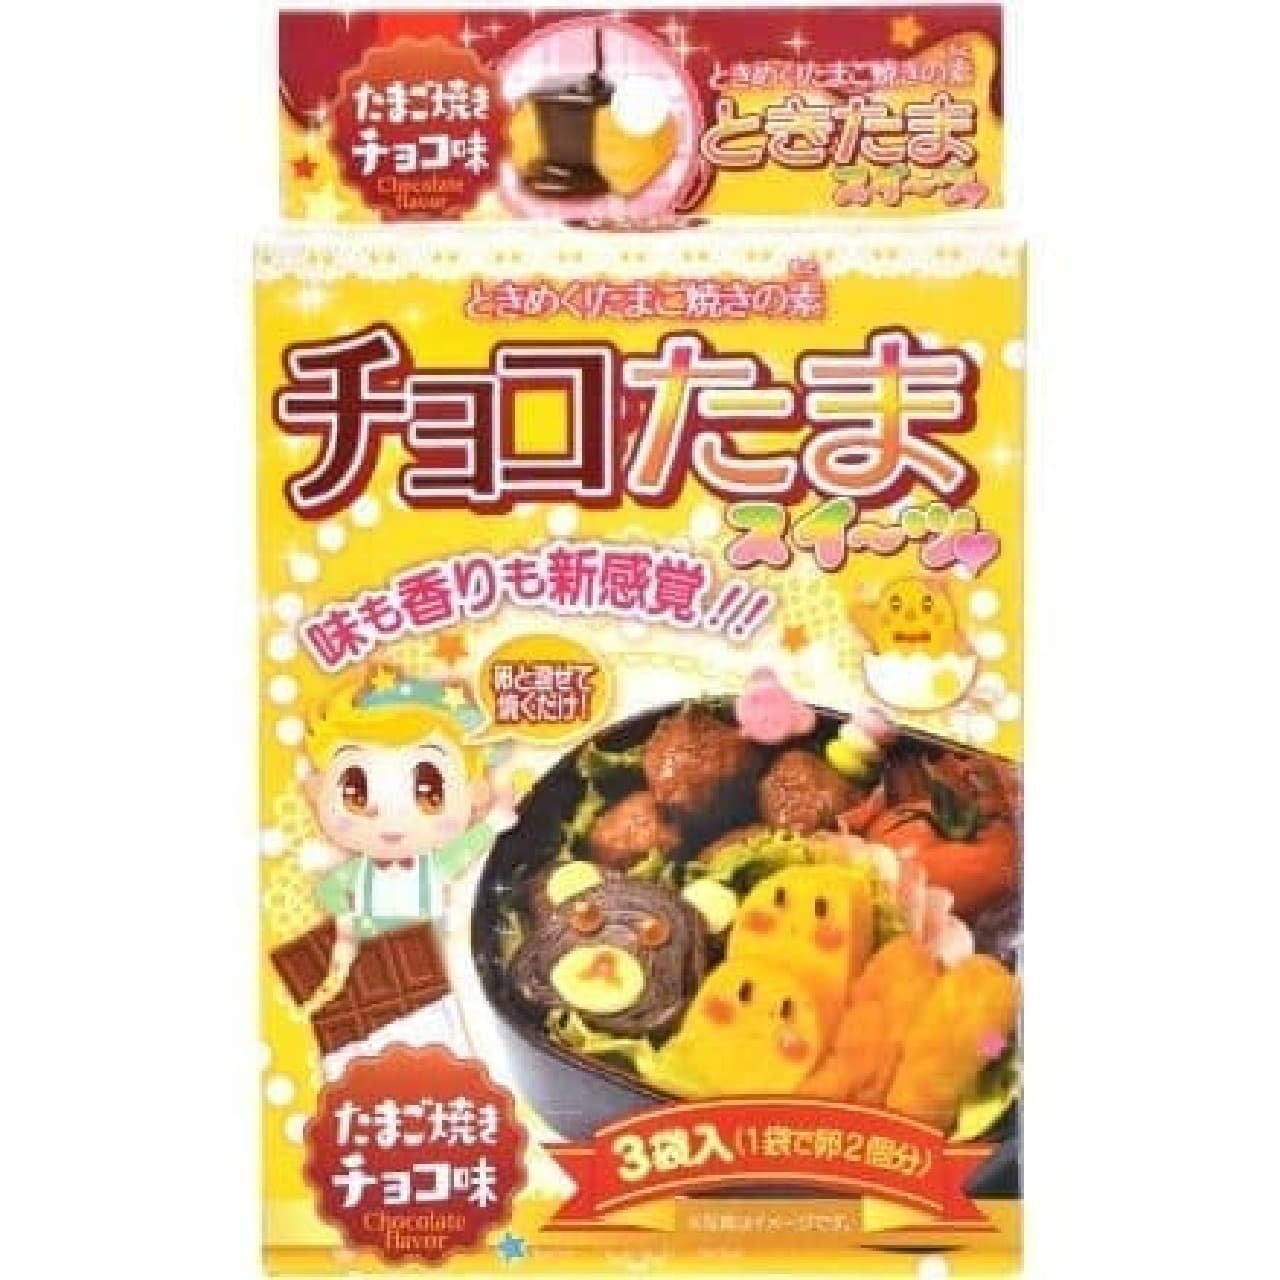 Ajigen "Chocolate Tama" Package